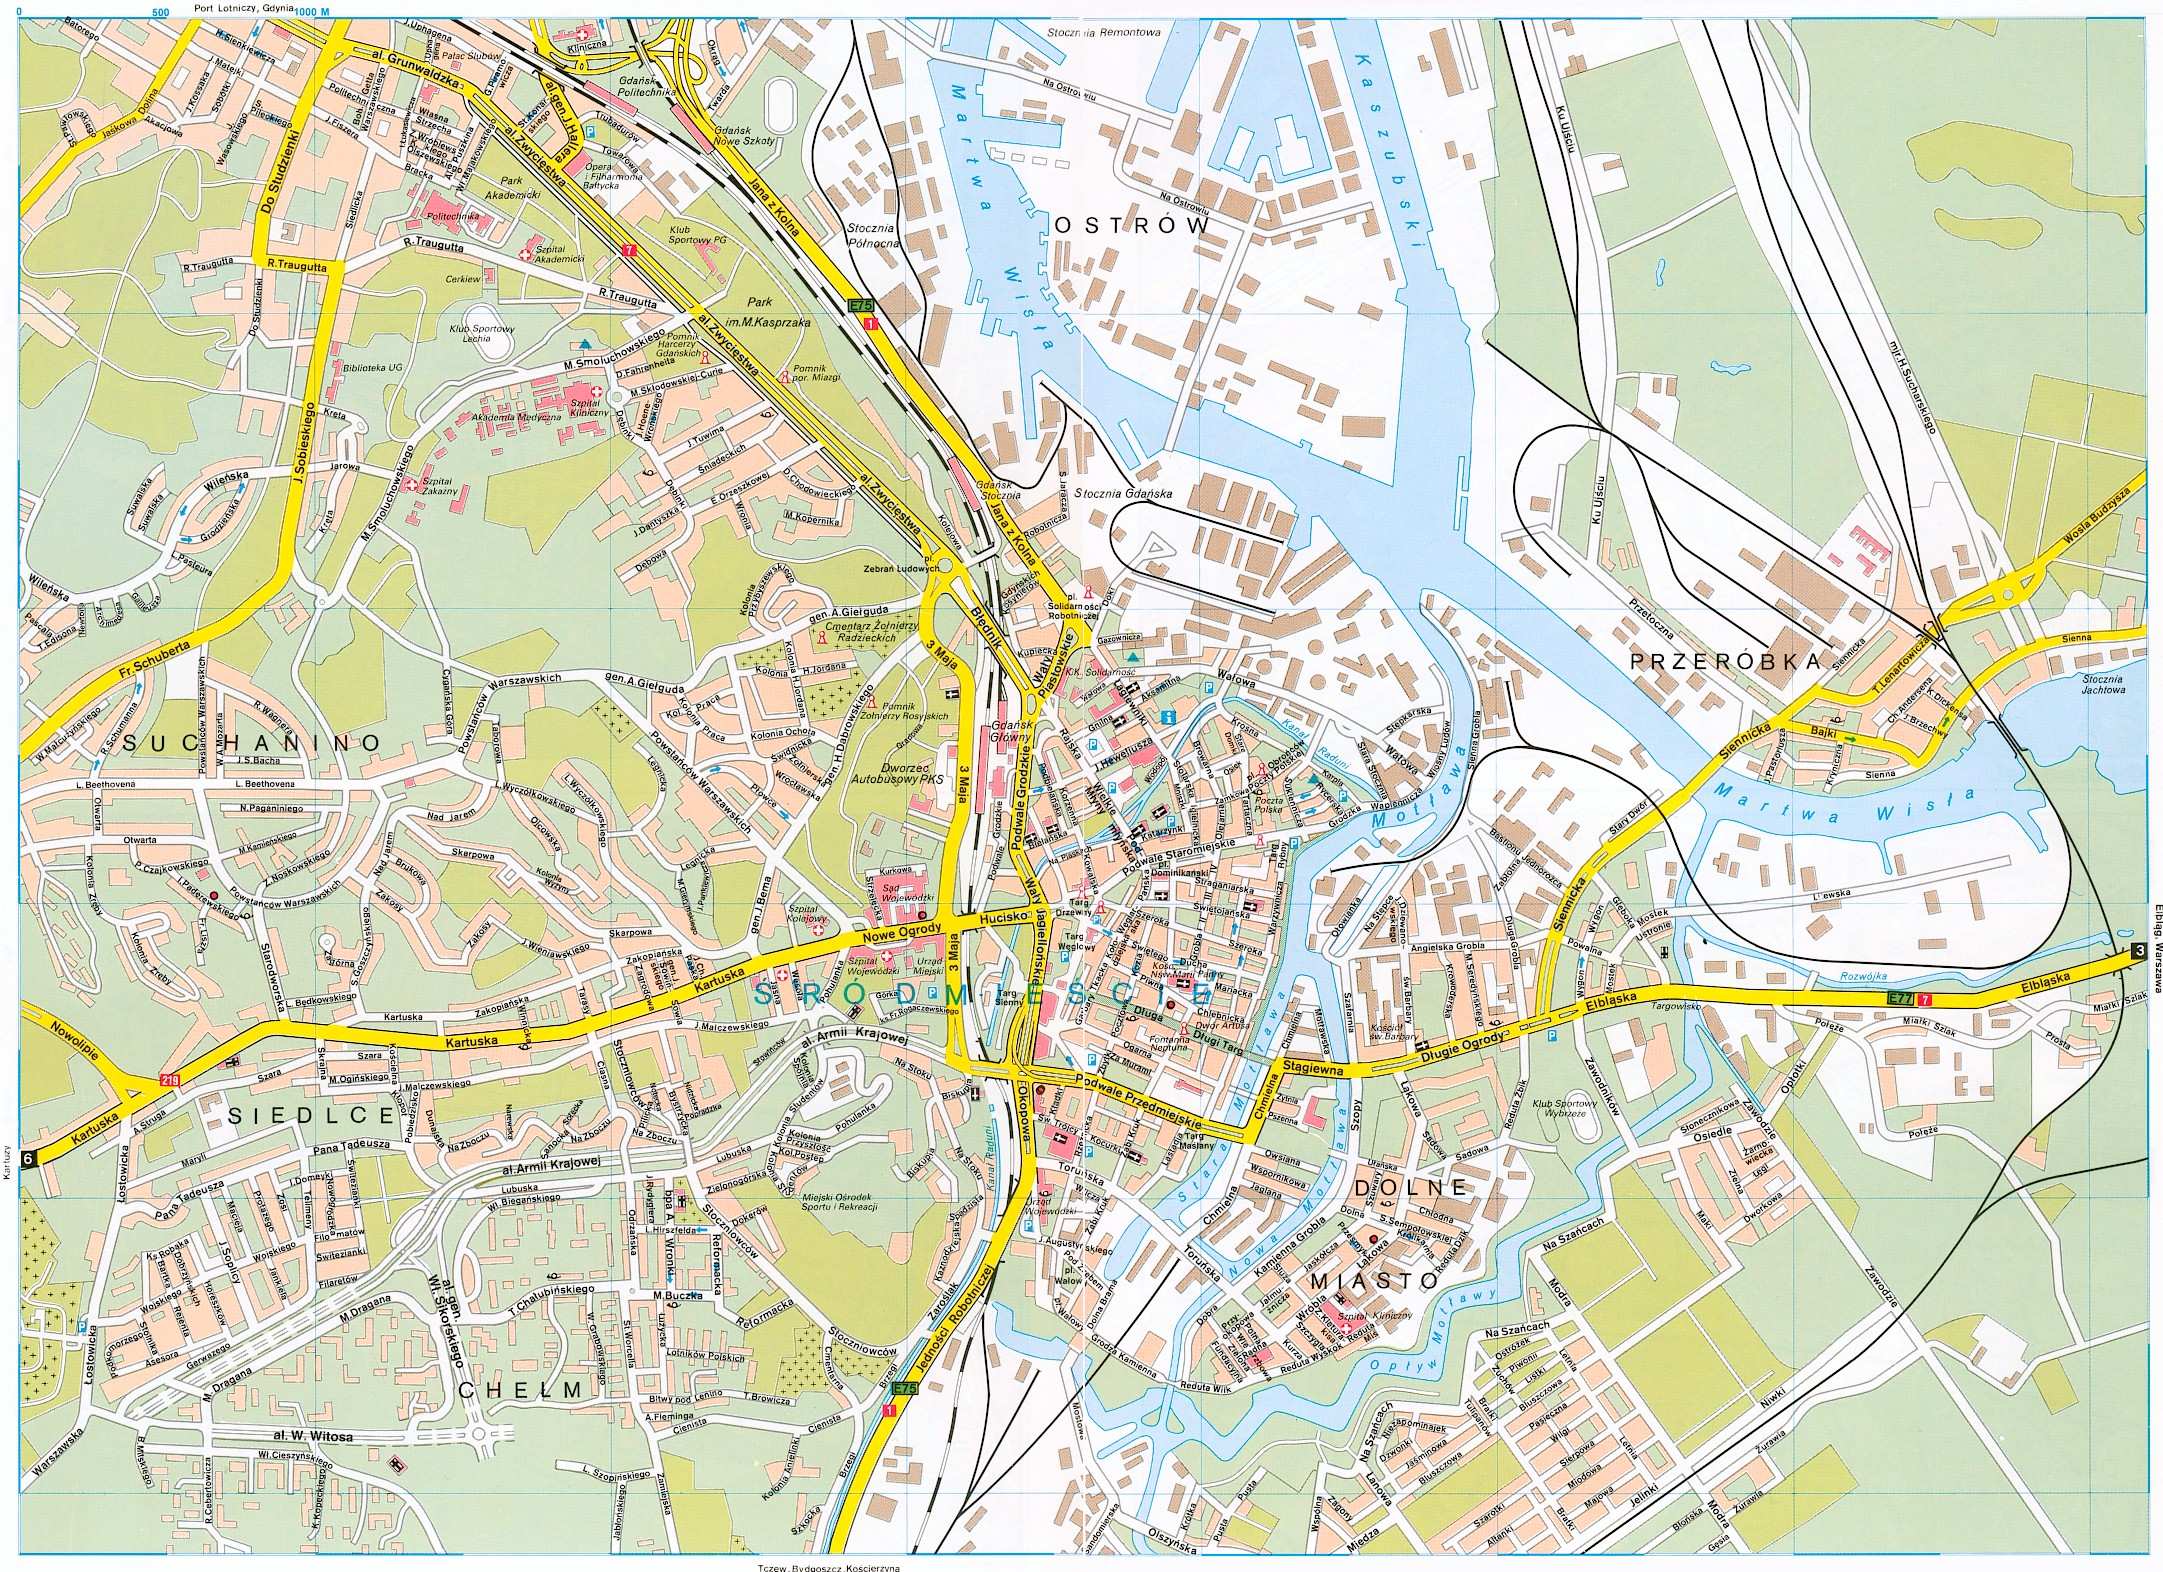 gdansk tourism map